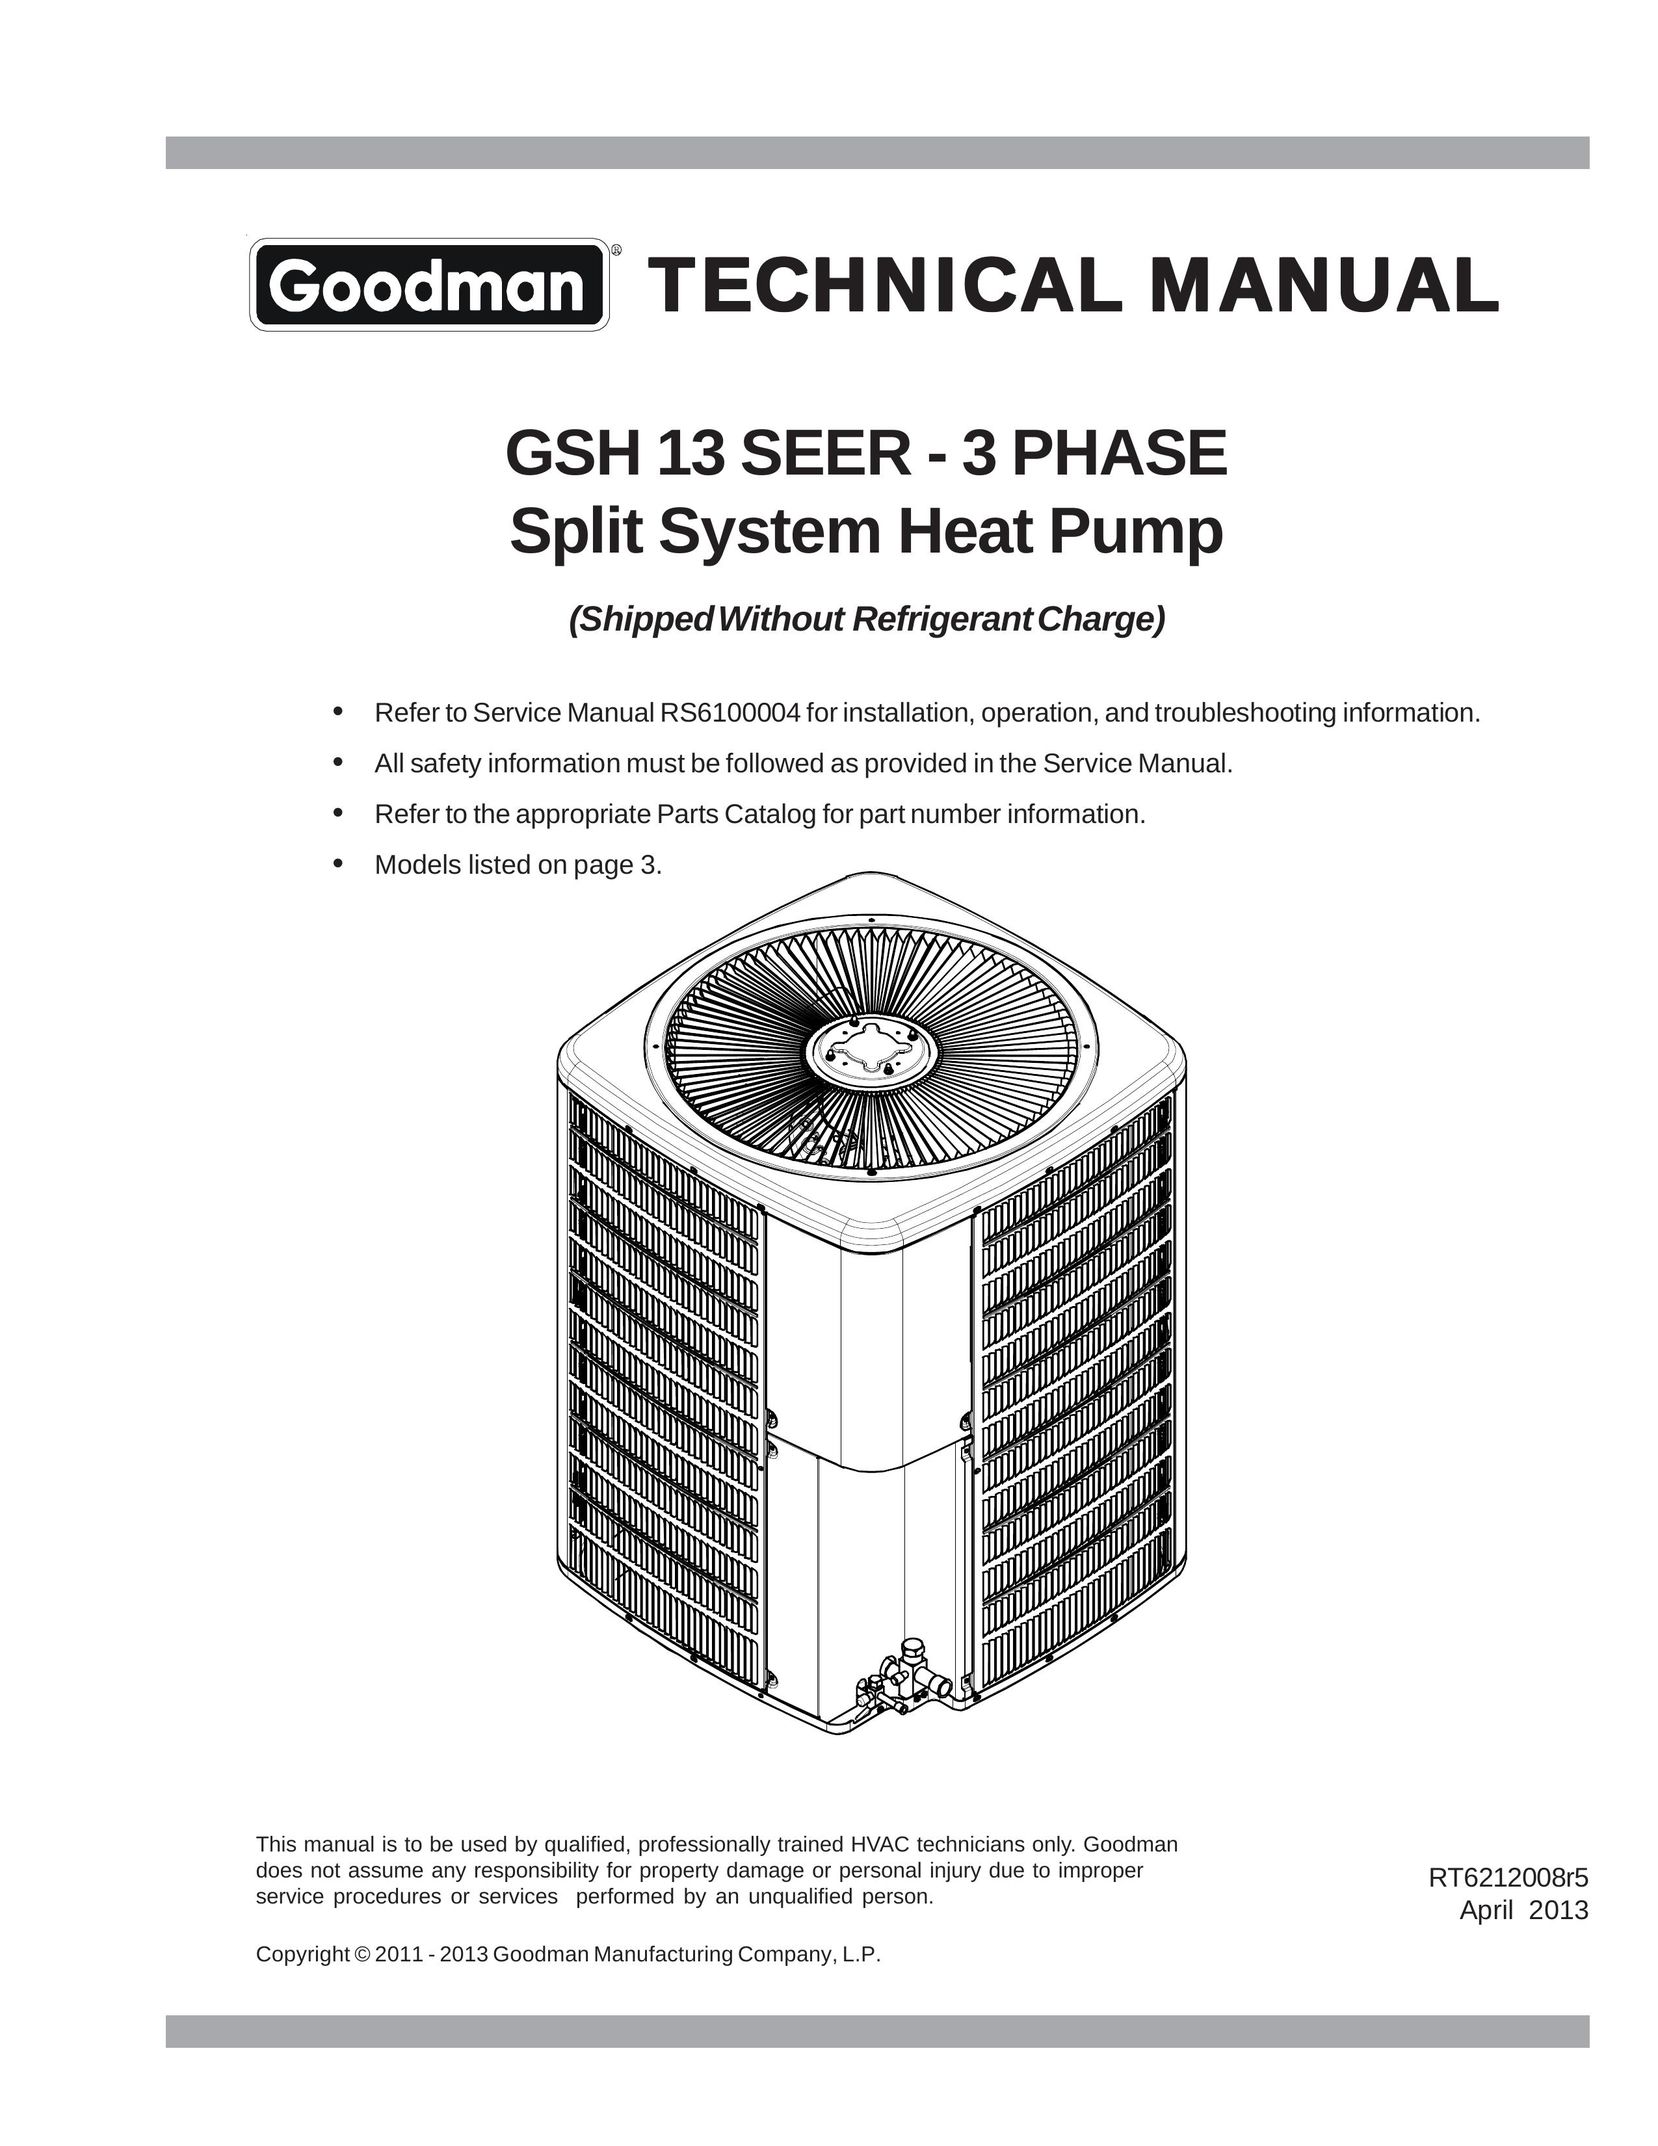 Goodmans GSH 13 SEER - 3 Phase Split System Heat Pump Heat Pump User Manual